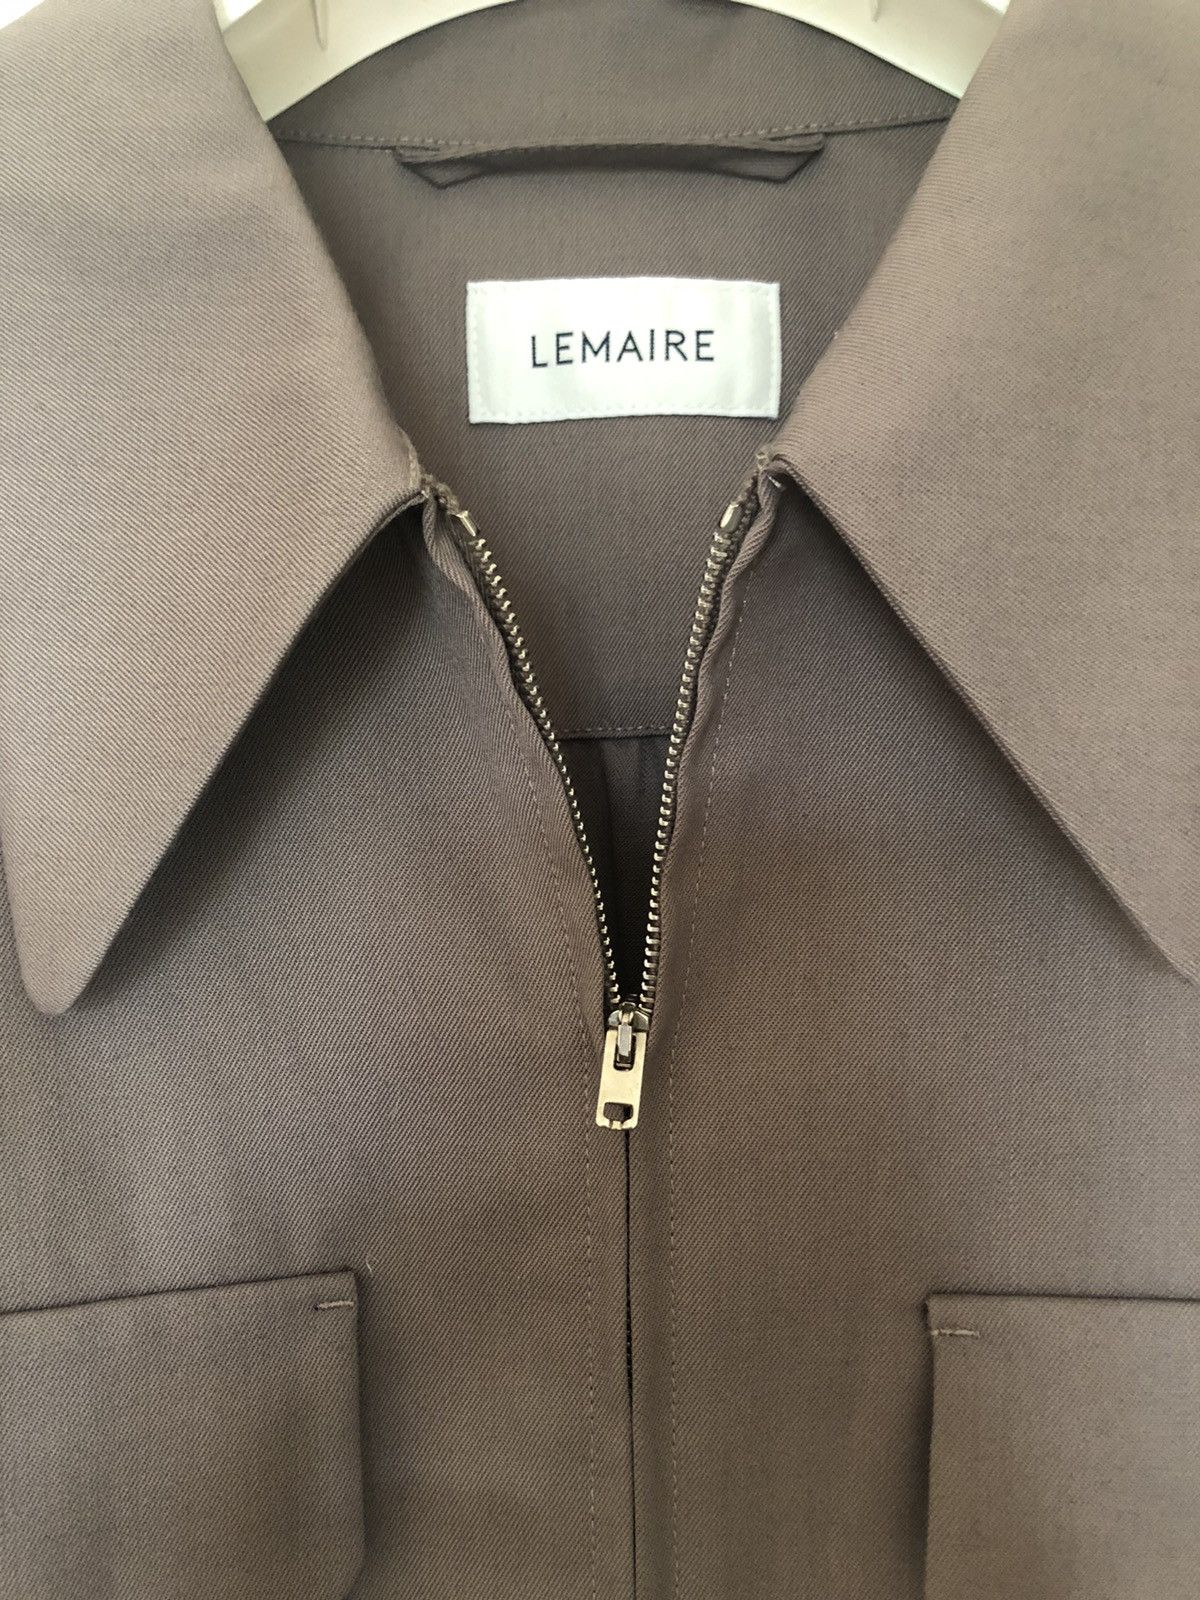 Lemaire Zipped light jacket Size US M / EU 48-50 / 2 - 9 Thumbnail